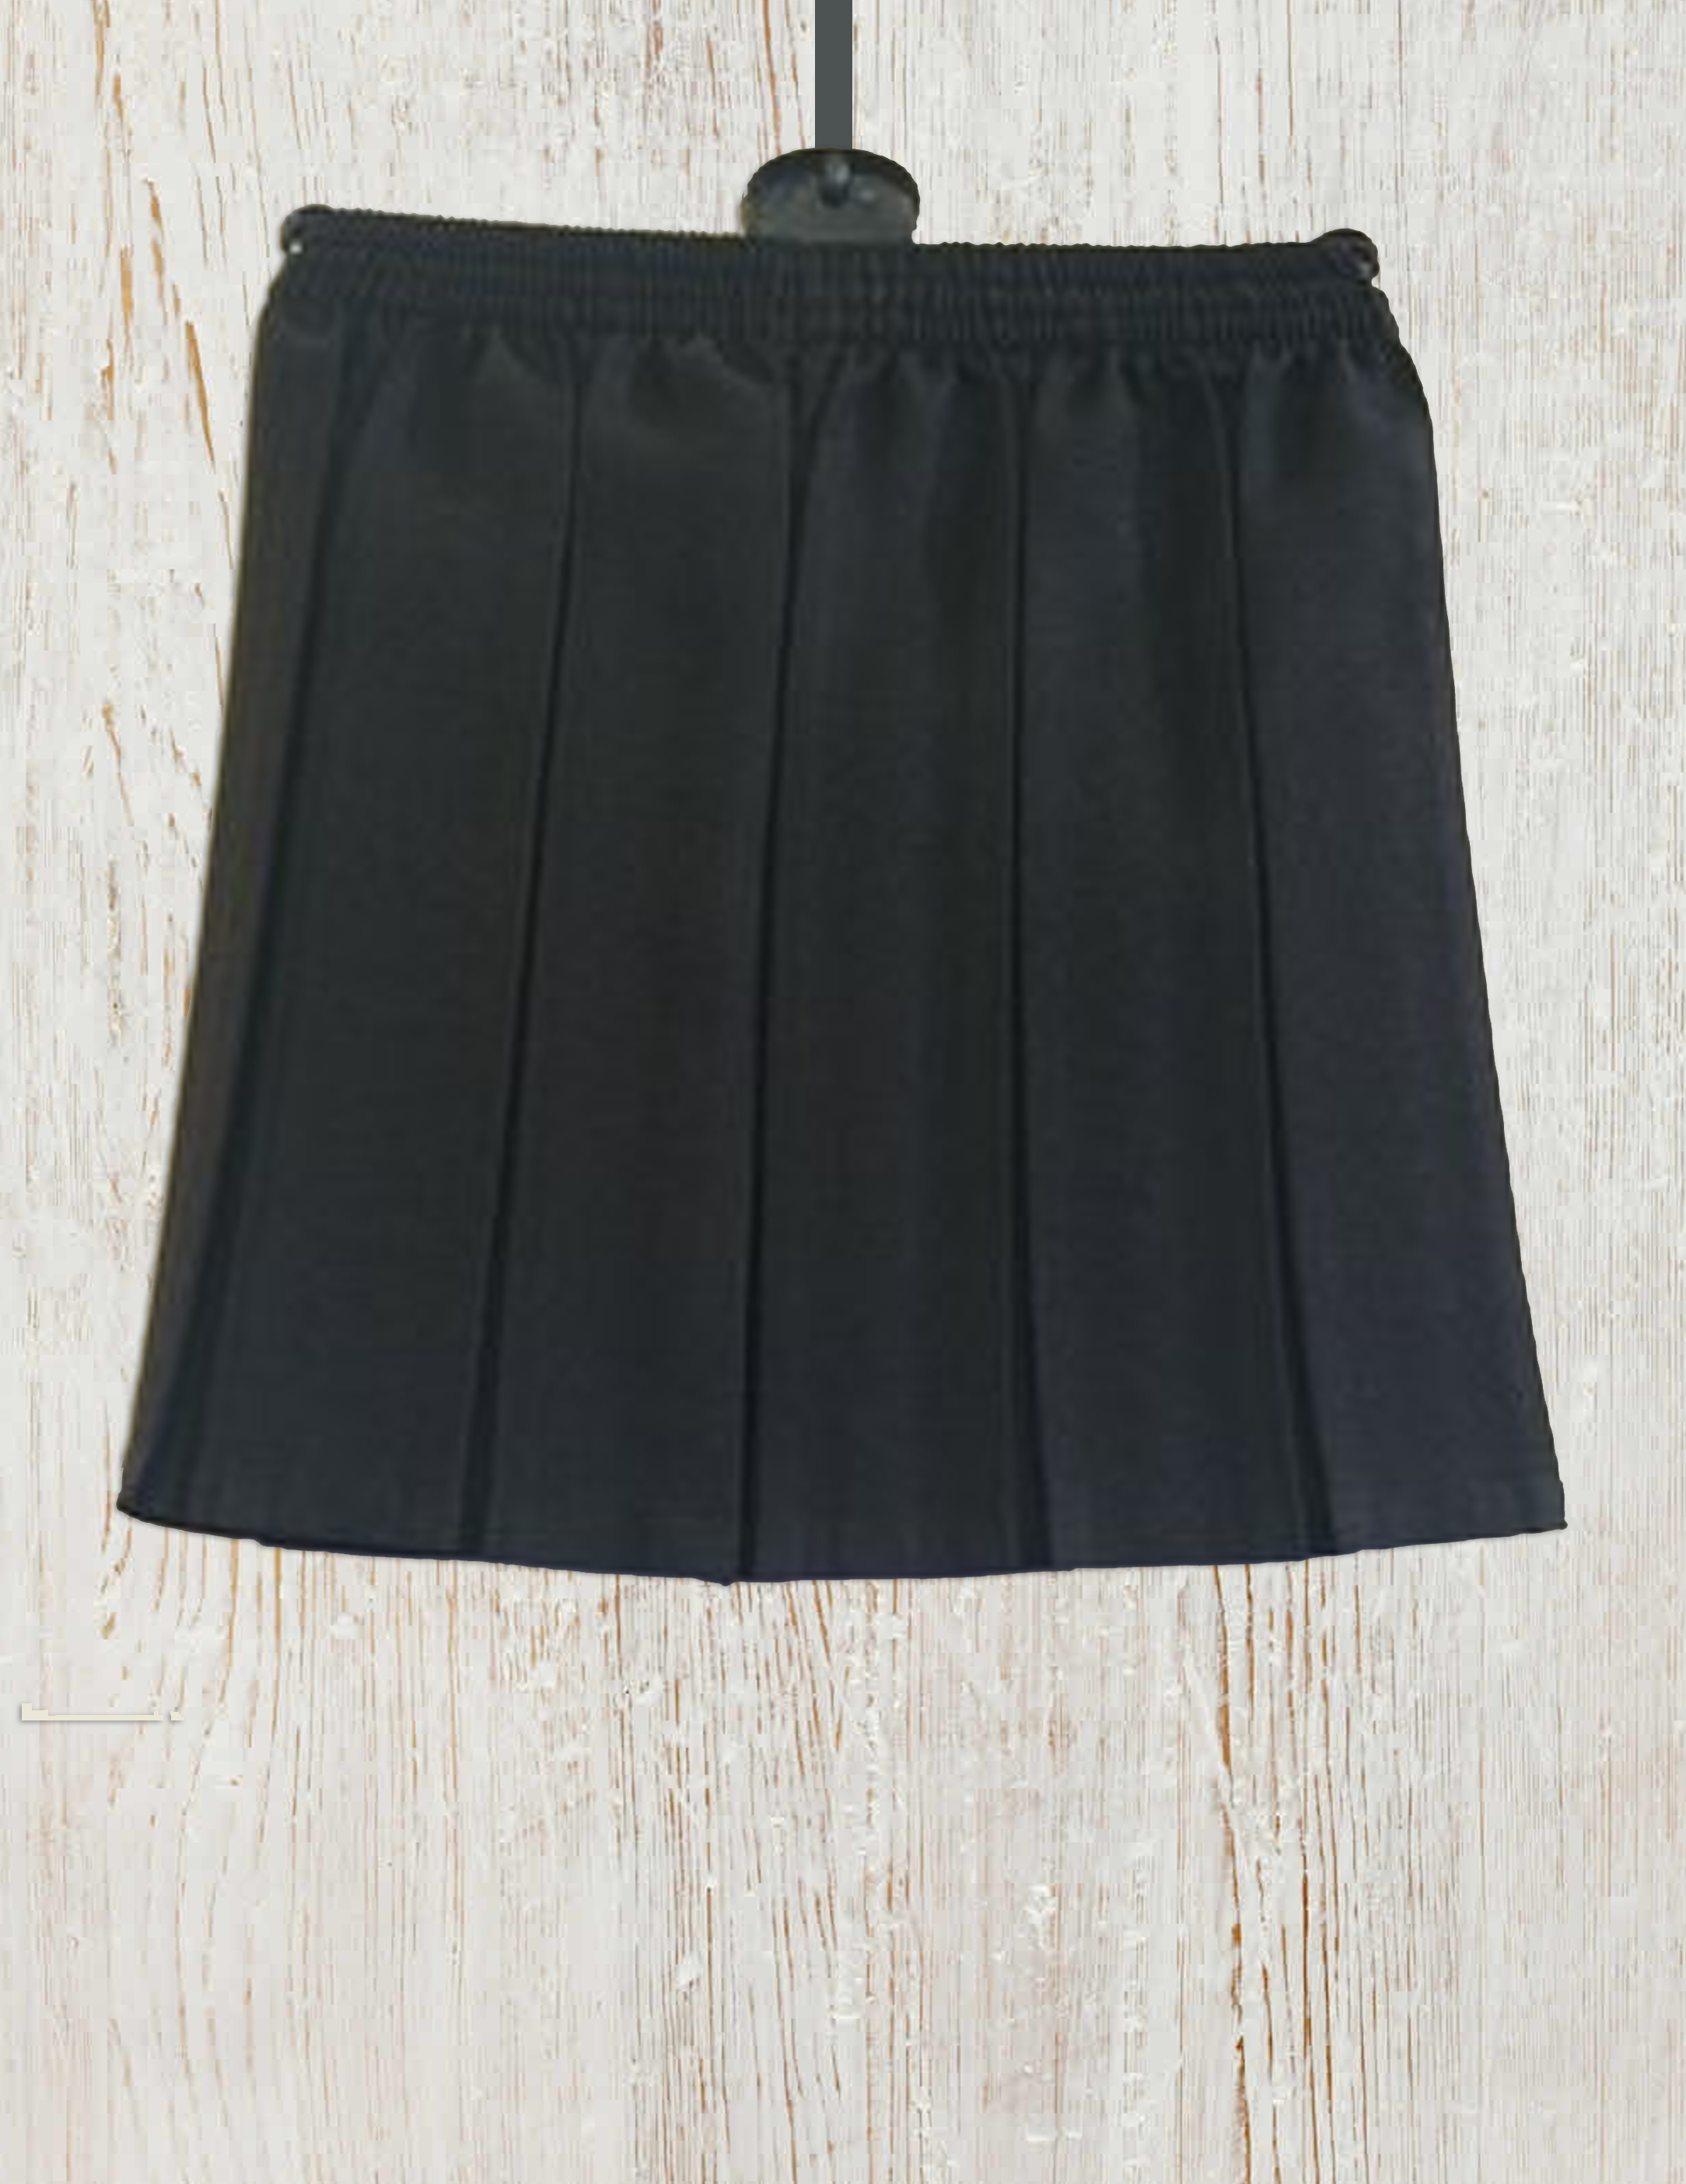 Black Pleated Skirt - The Schoolwear CentreThe Schoolwear Centre